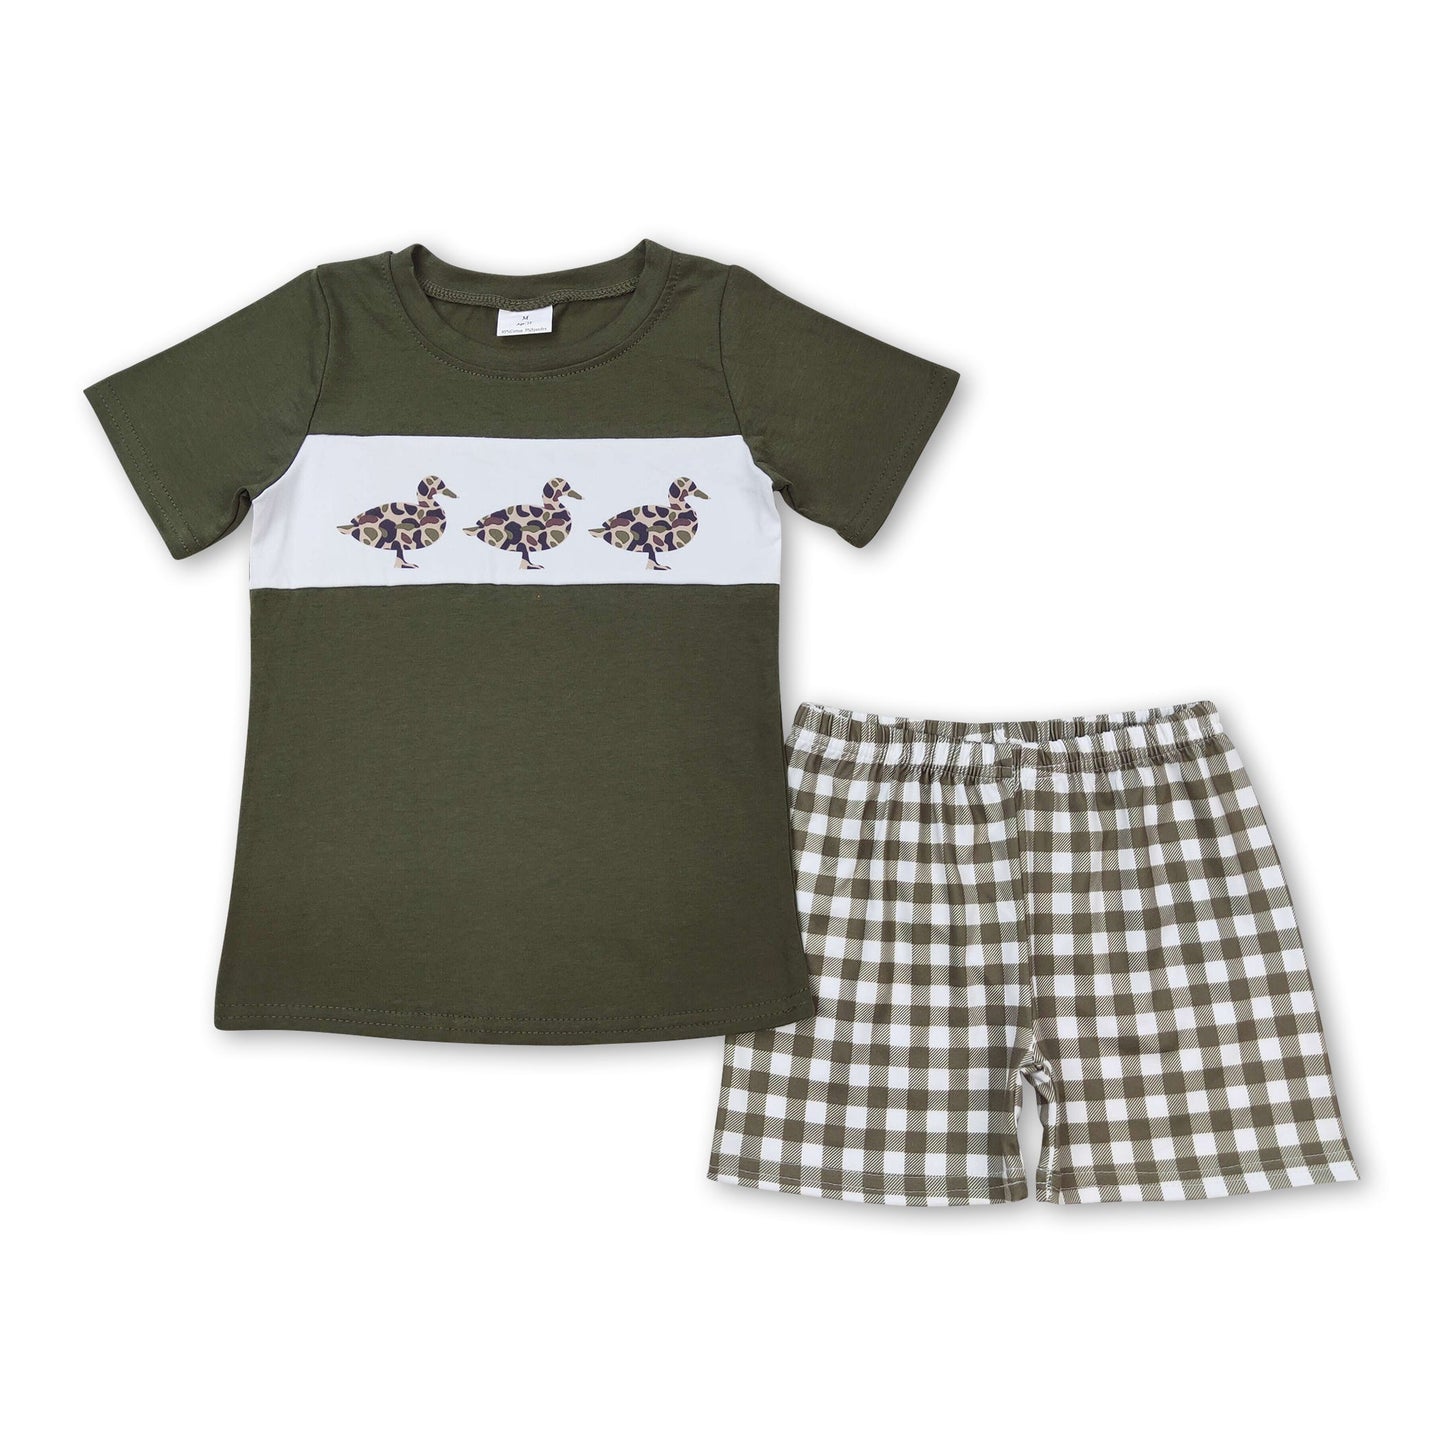 Olive duck top plaid shorts boys clothing set